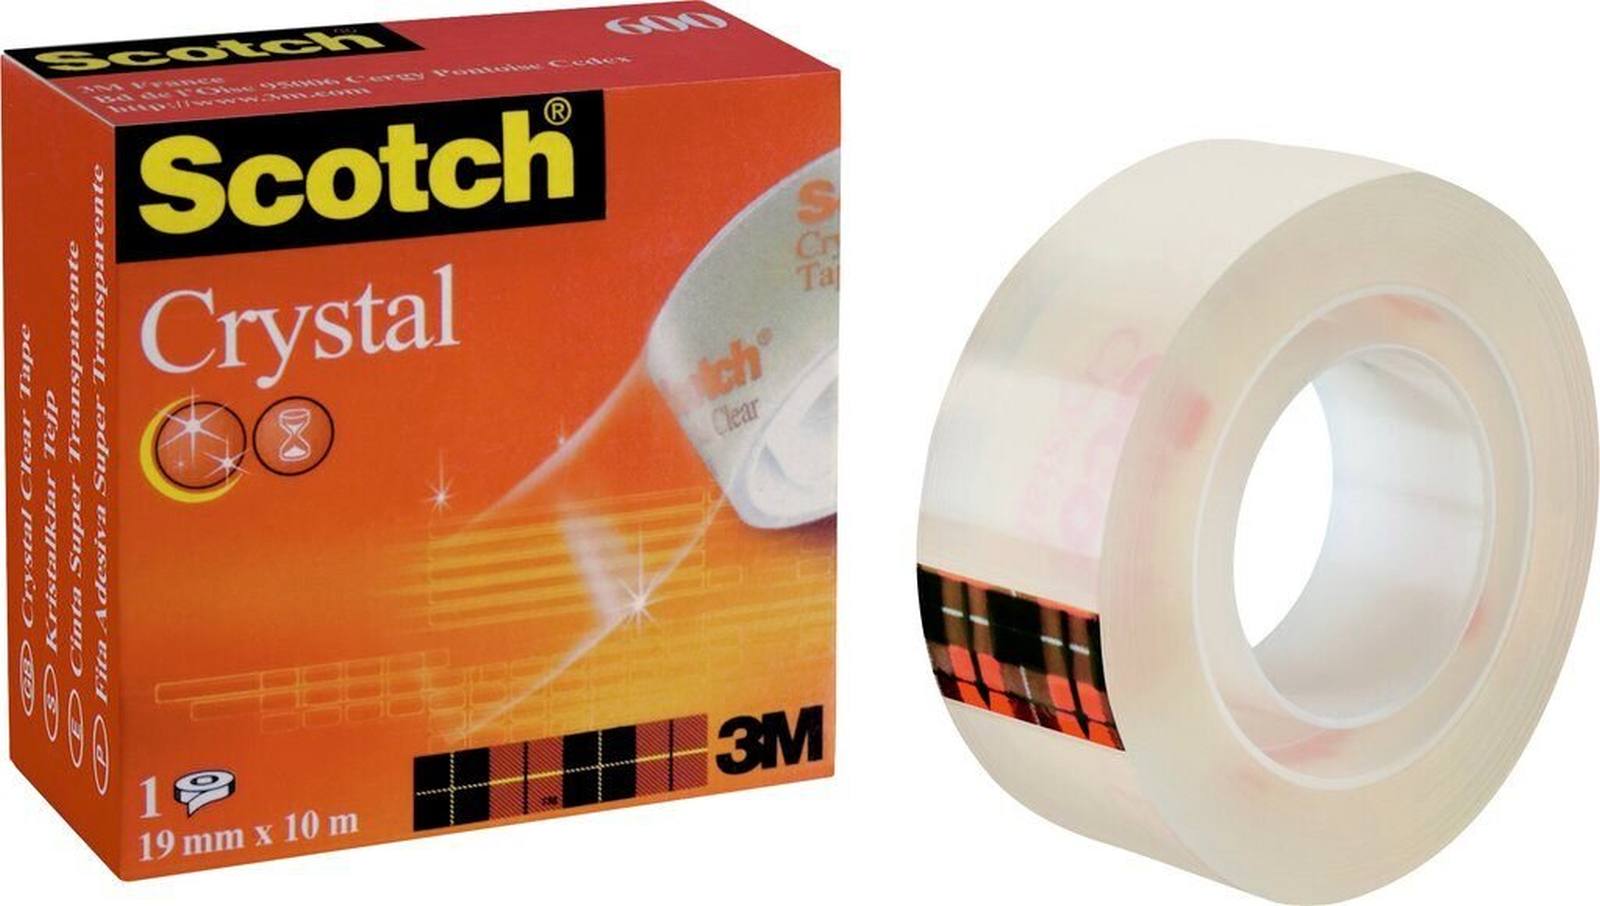 3M Scotch Crystal plakband 1 rol 19 mm x 10 m